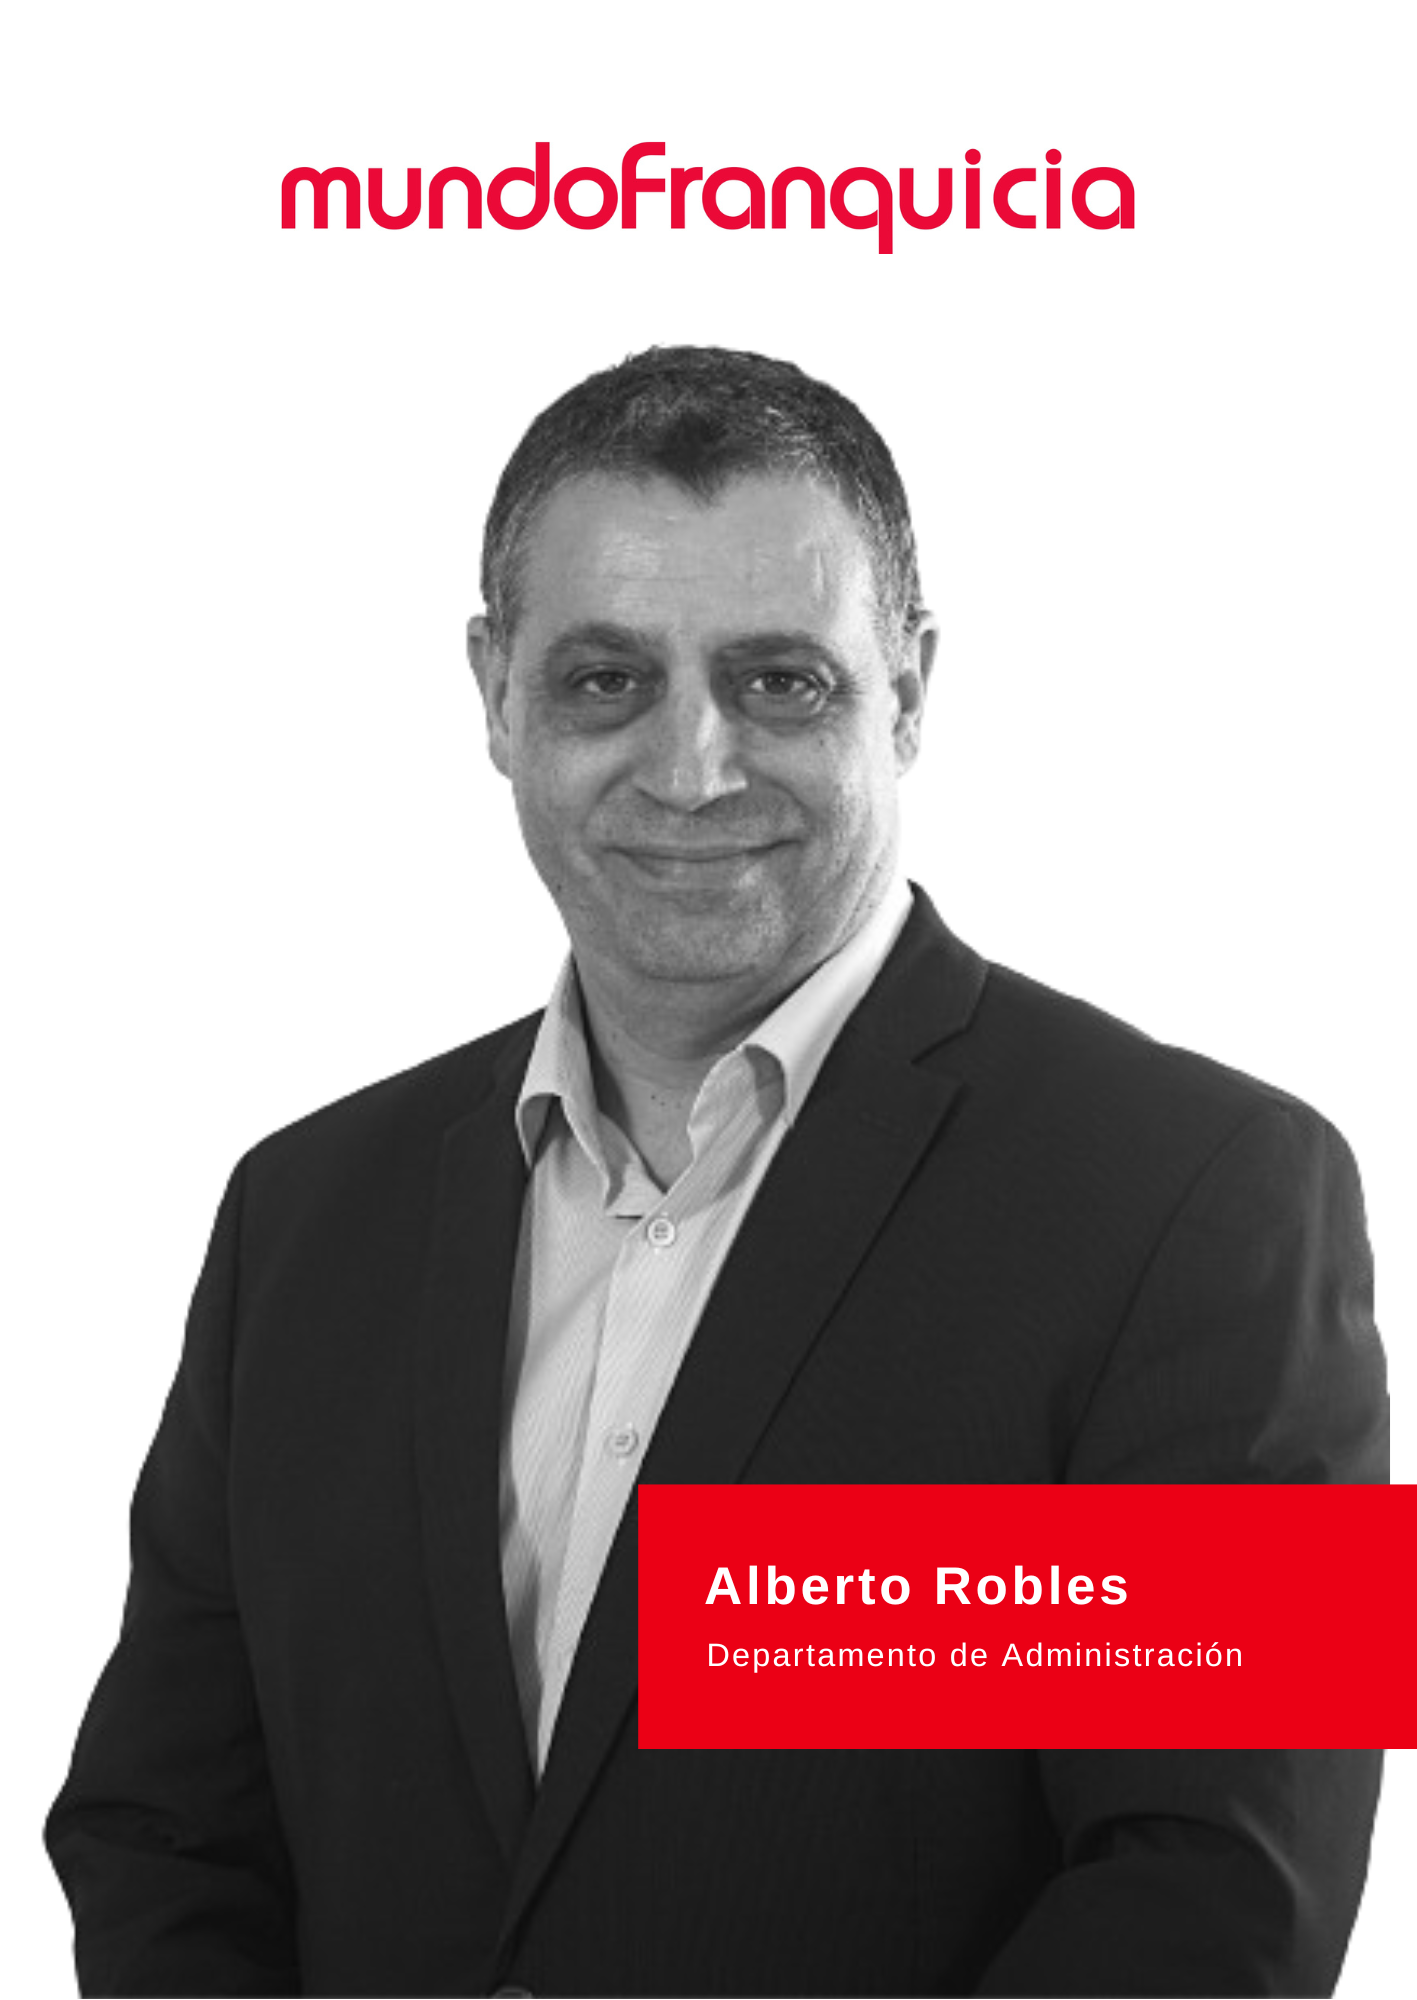 Jesús Alberto Robles